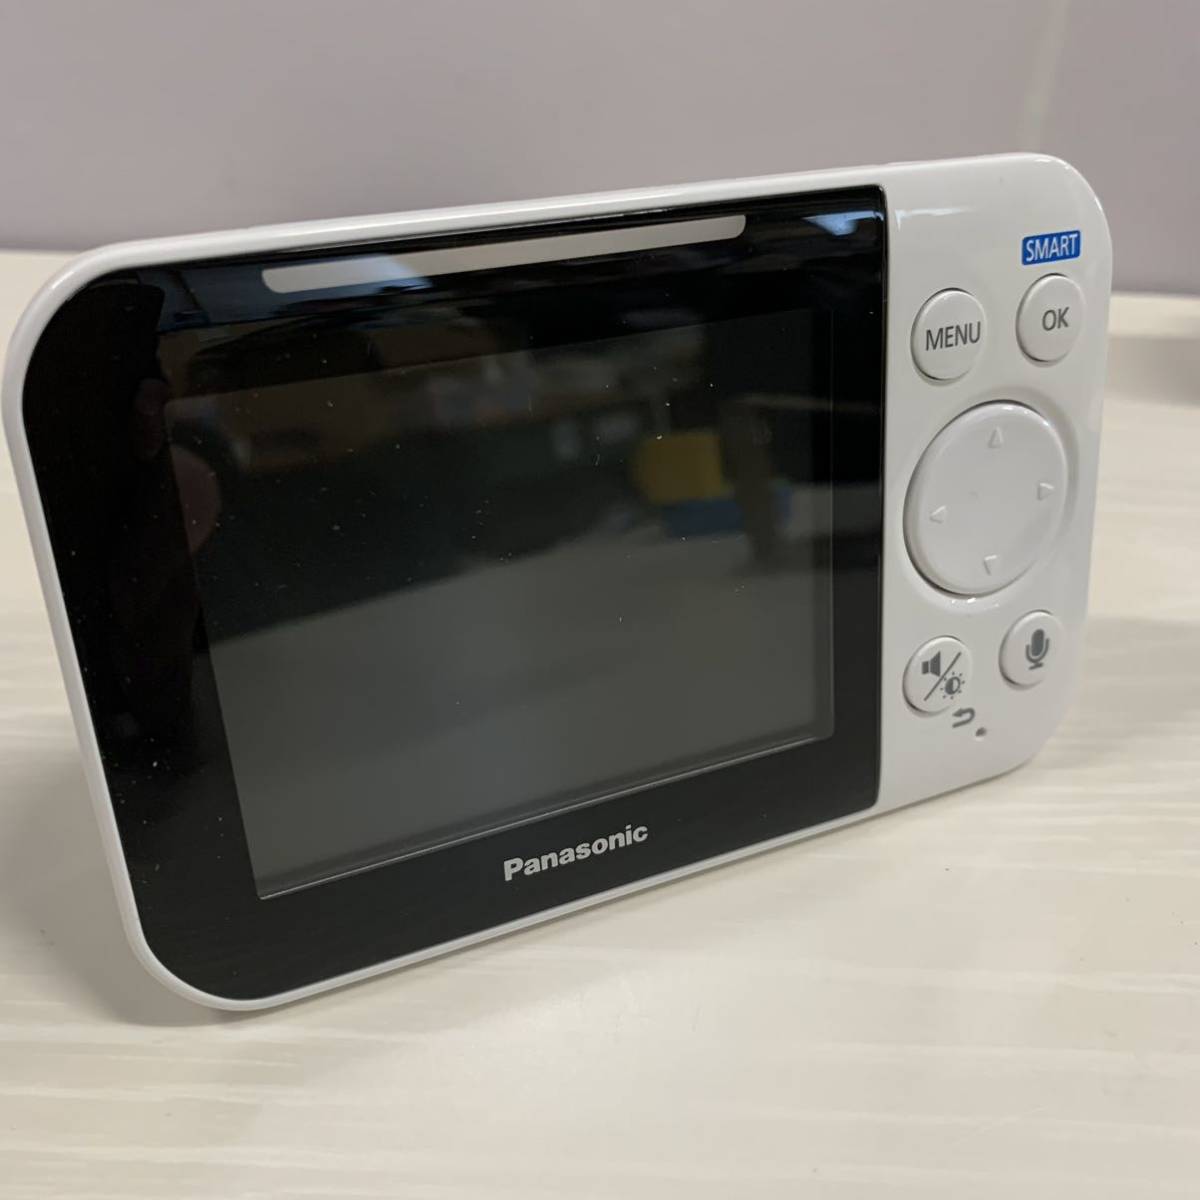 Panasonic Panasonic baby monitor sma@ Home wireless KX-HC705-W [ junk ]